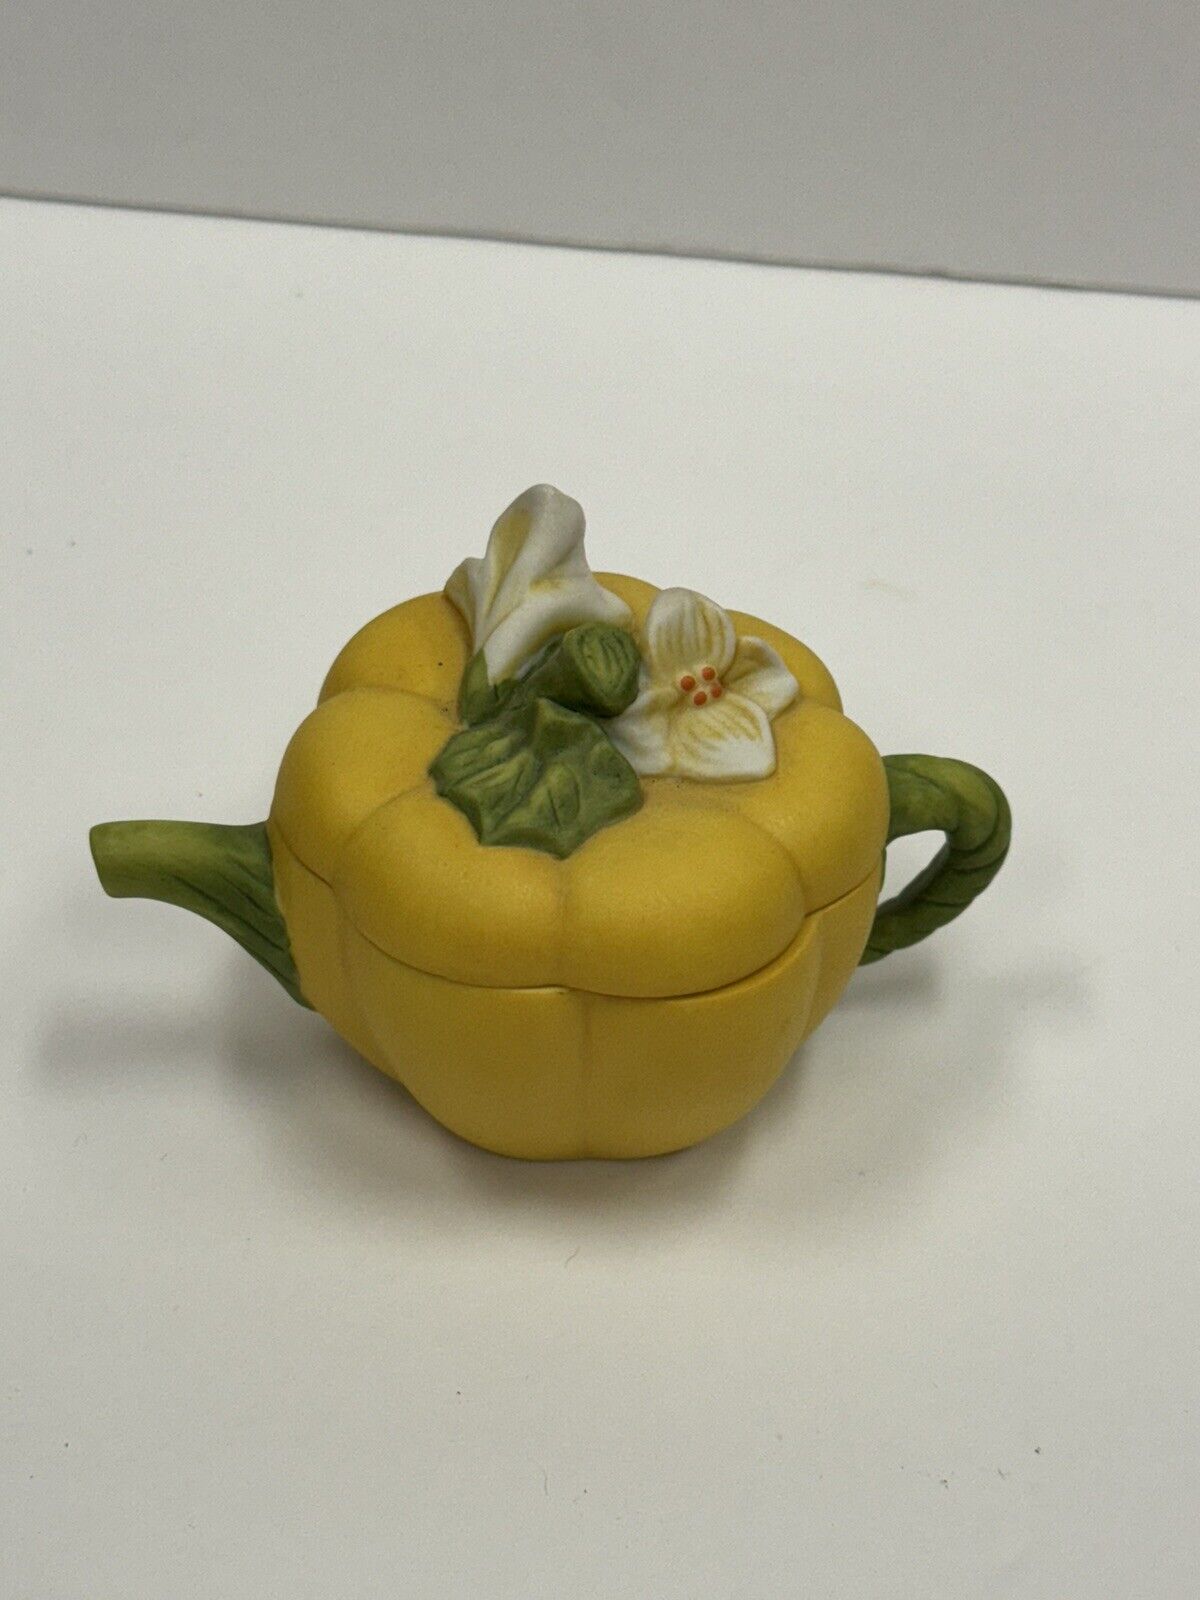 Vintage Avon Decorative Mini Teapot 1996 Yellow Pumpkin Shape Collectible Pot